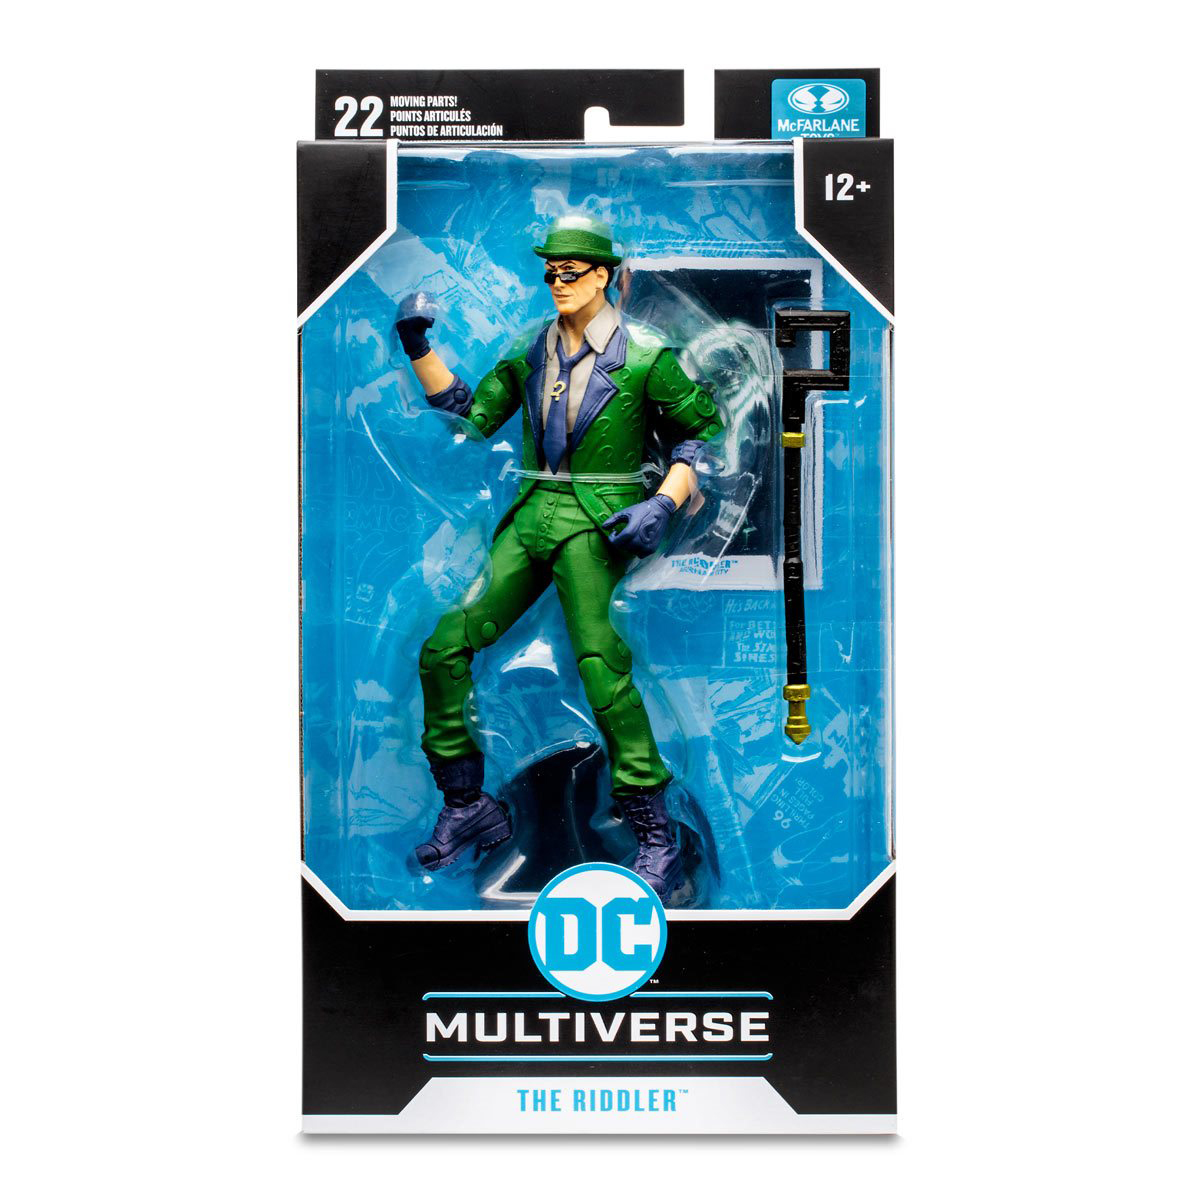 McFarlane-DC-Multiverse-DC-Gaming-The-Riddler-Arkham-City-Action-Figure-Packaging-Box-Art